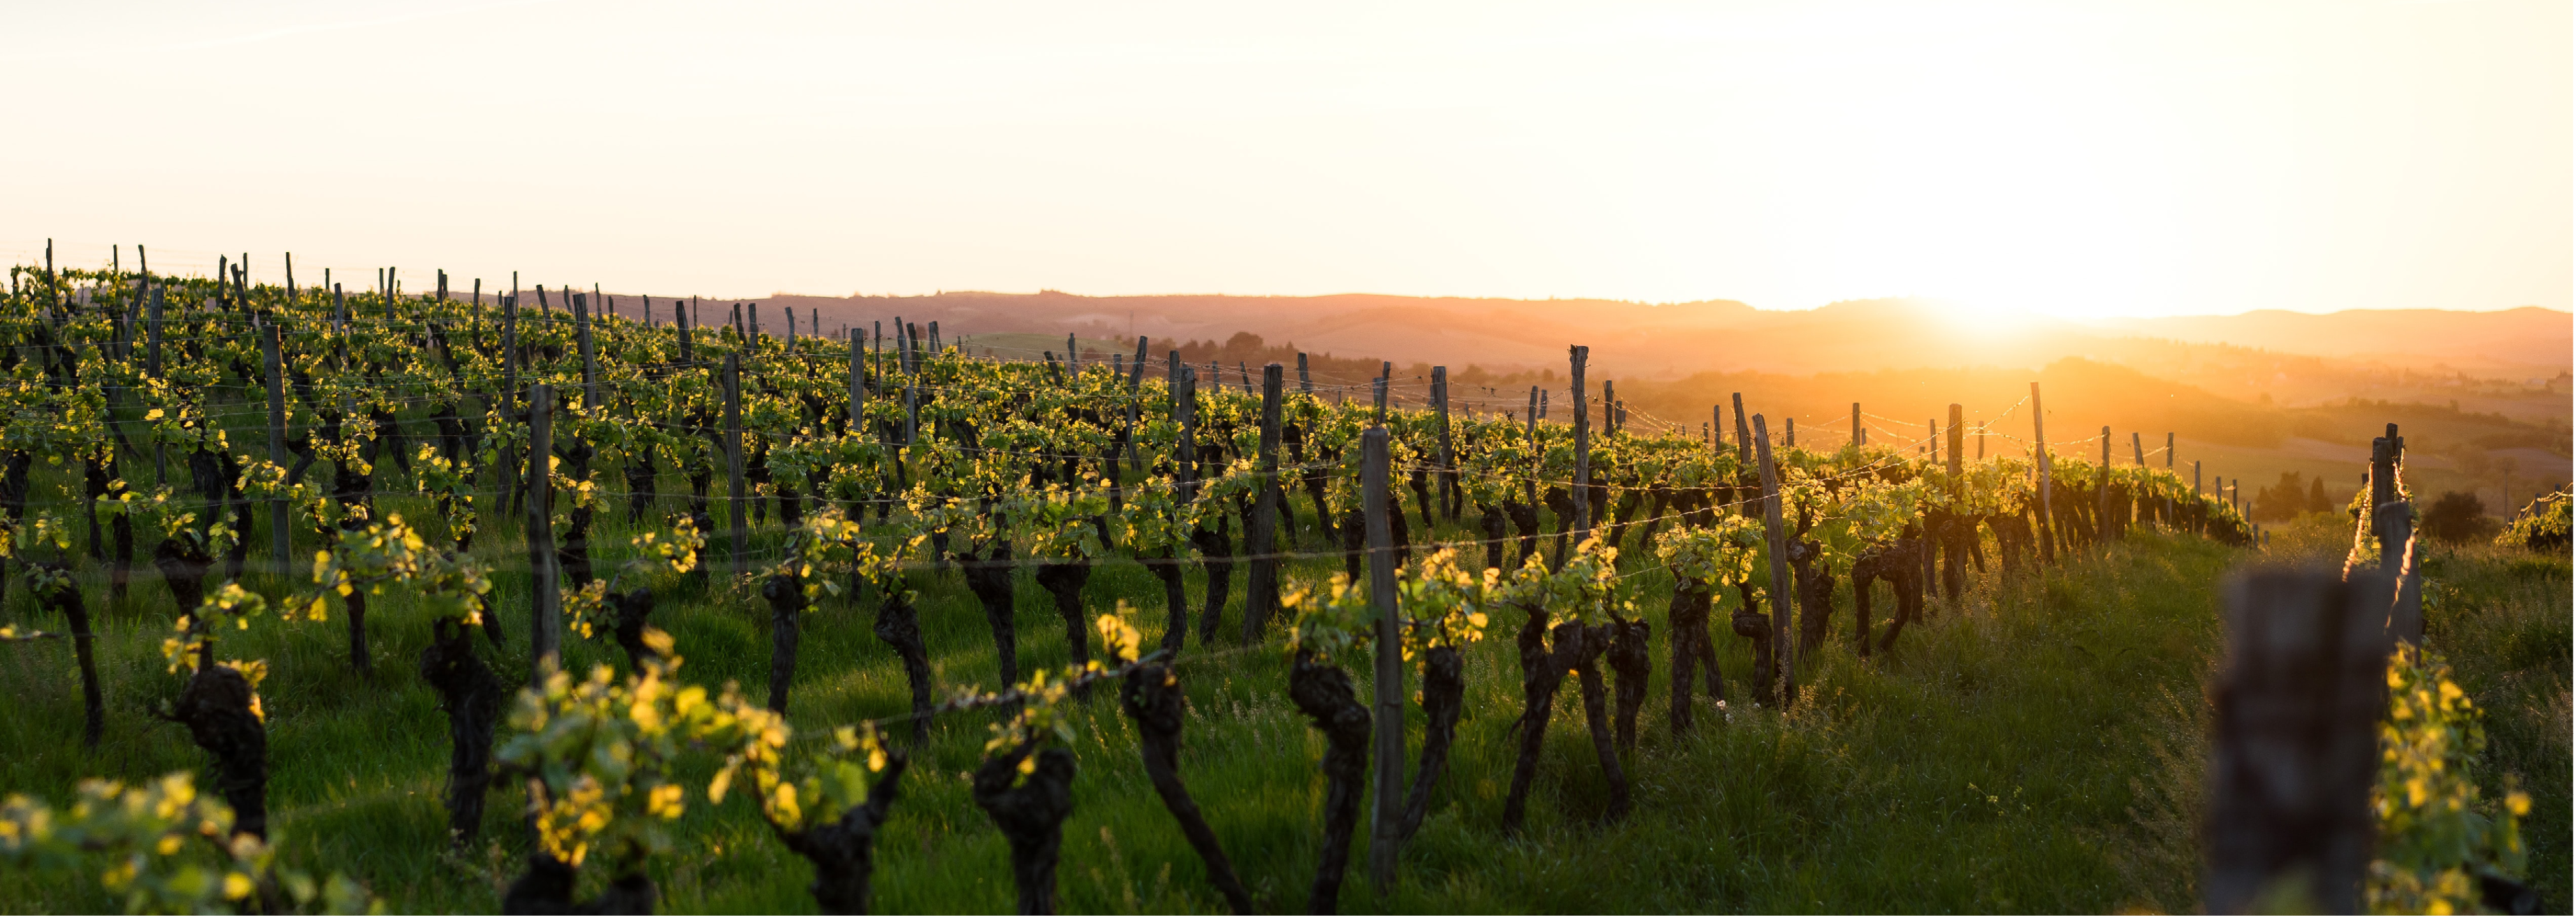 Sélection du vin du mois - Photo by Boudewijn “Bo” Boer on Unsplash